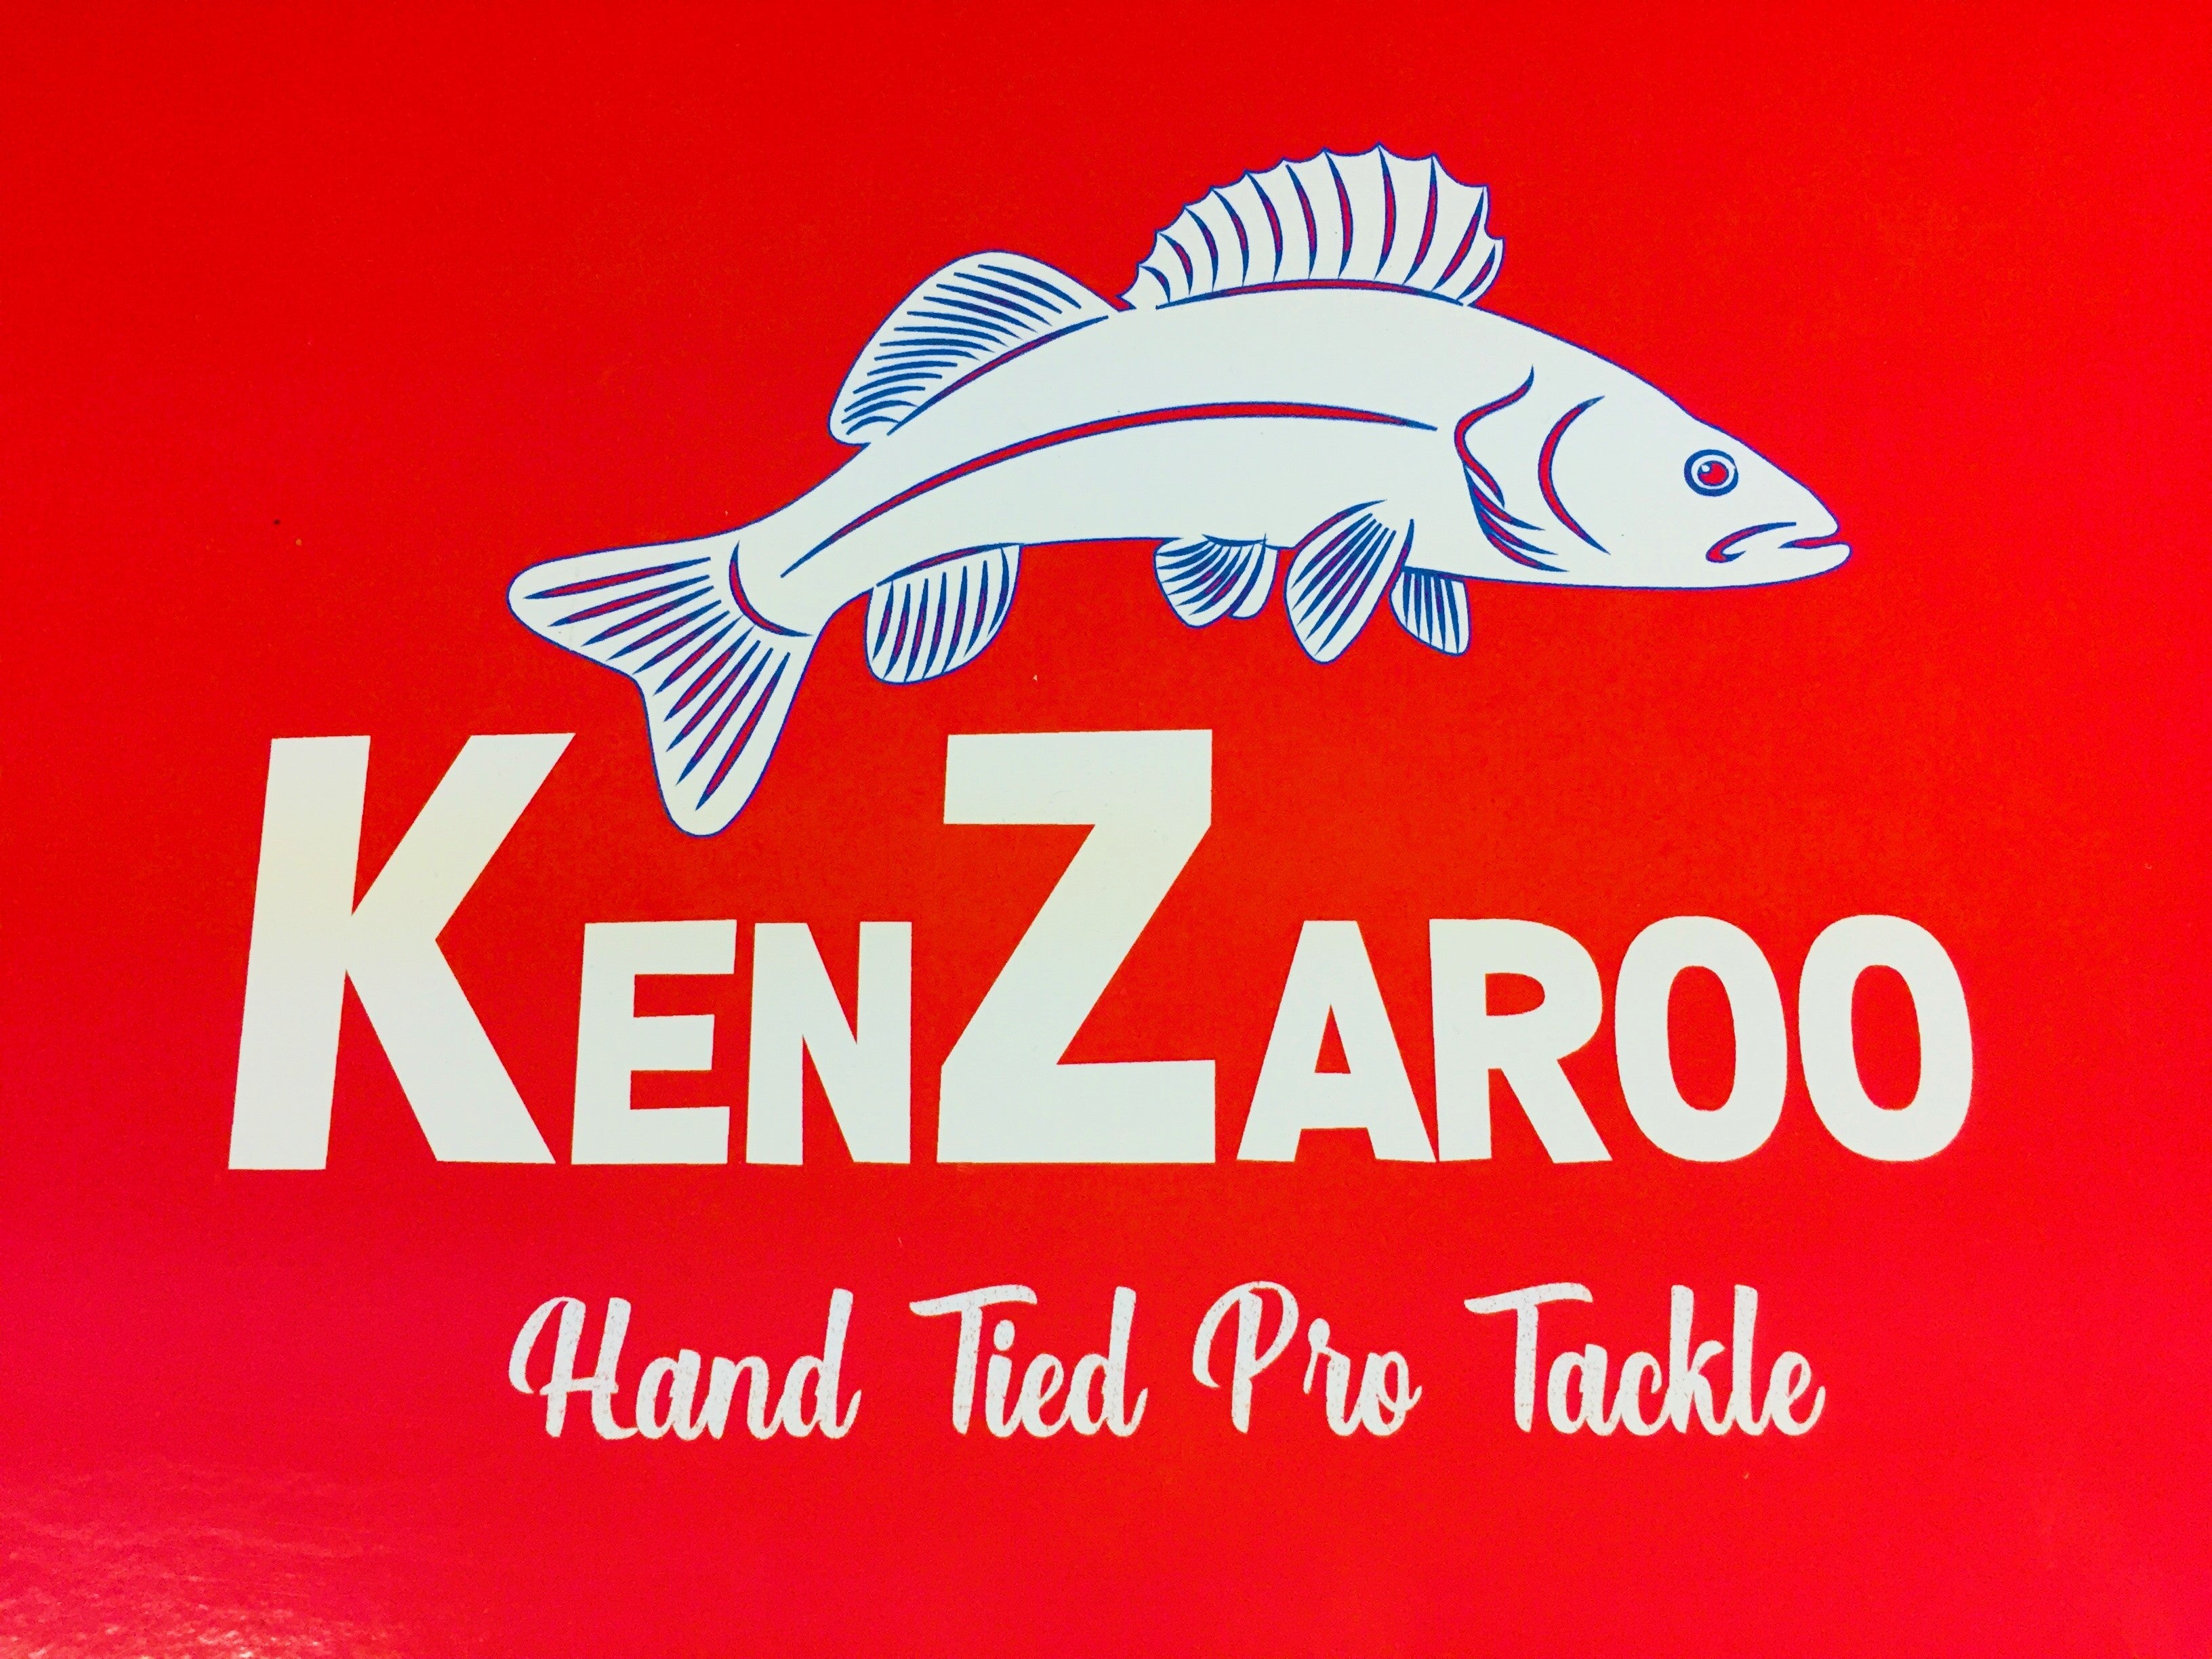 KenZaroo Pro Tackle (@kenzarootackle) • Instagram photos and videos